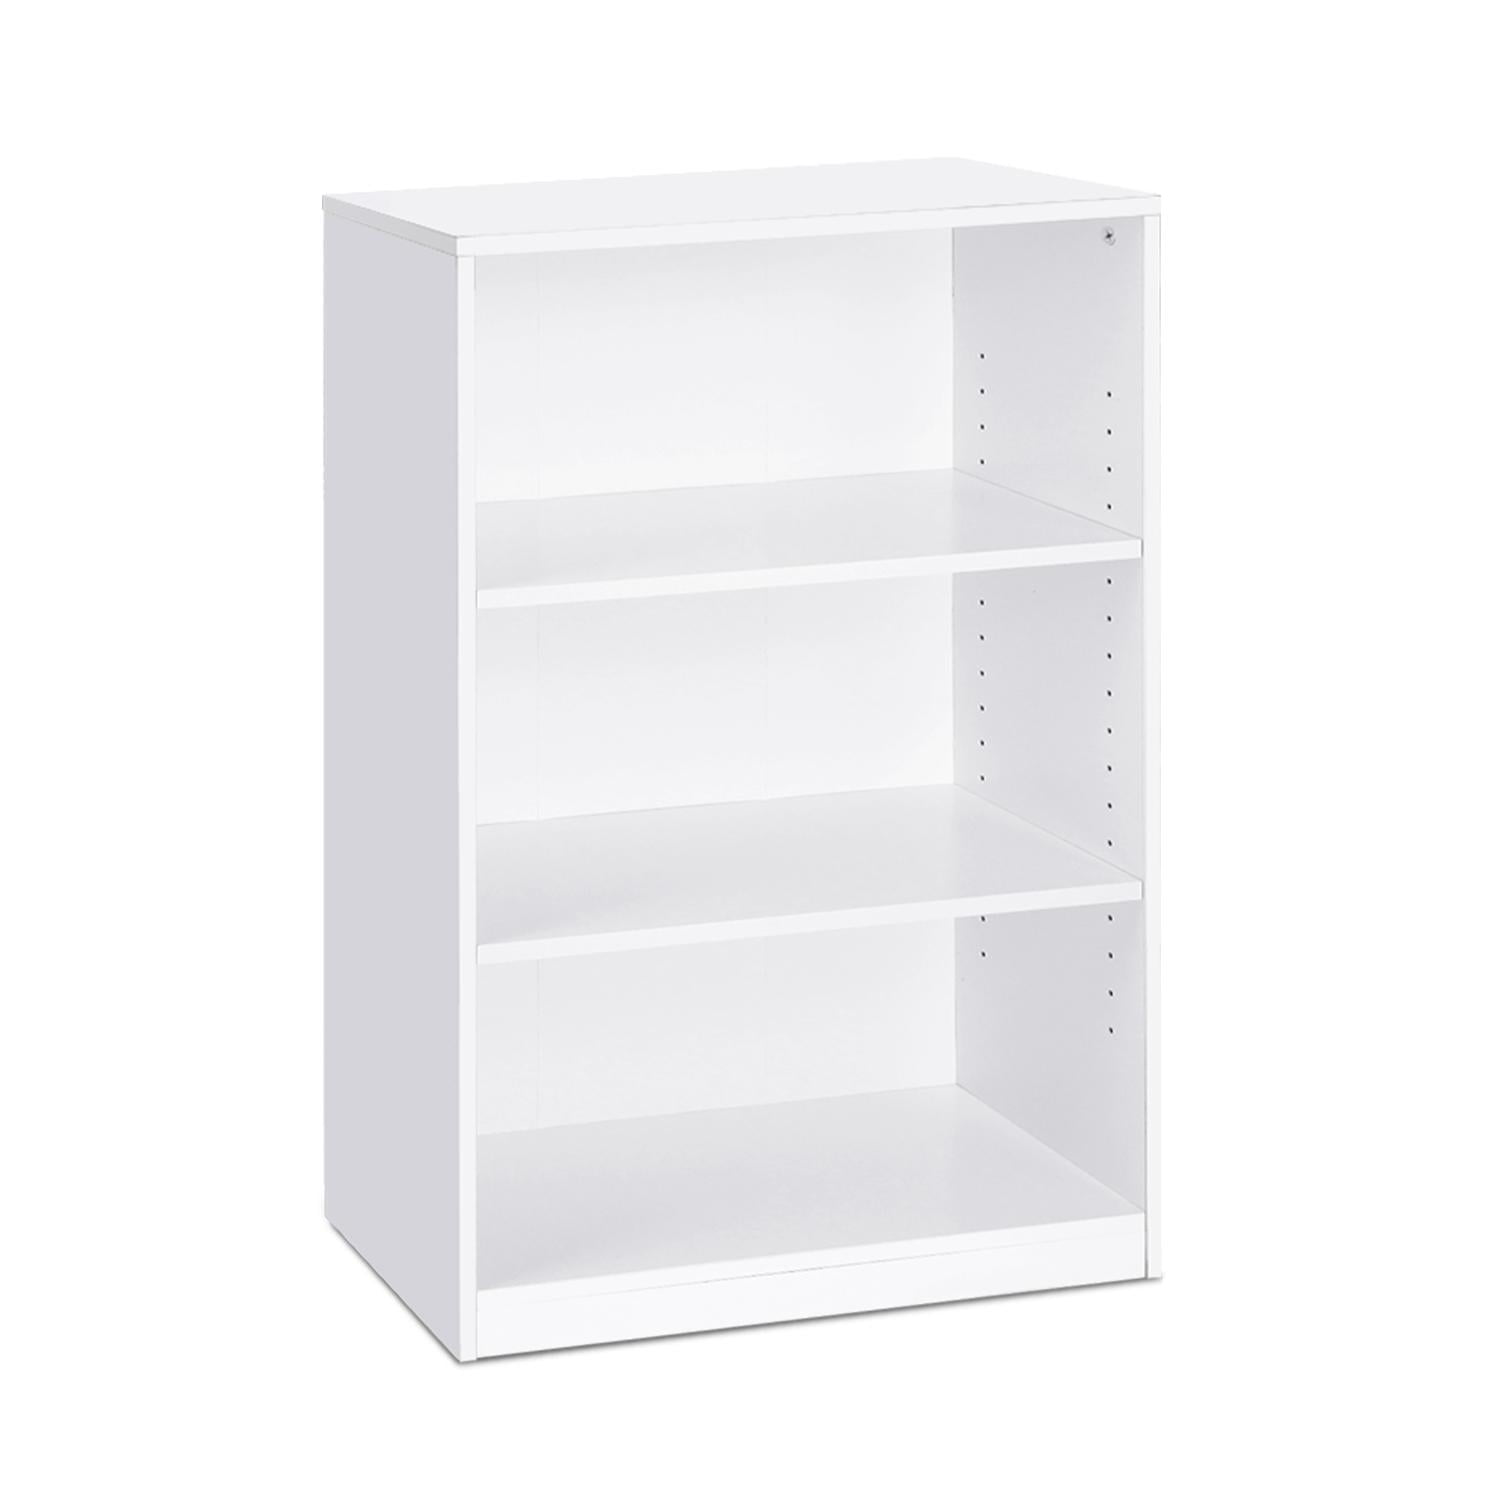 Furinno Jaya Simple Home 3 Shelf, White 3 Shelf Bookcase